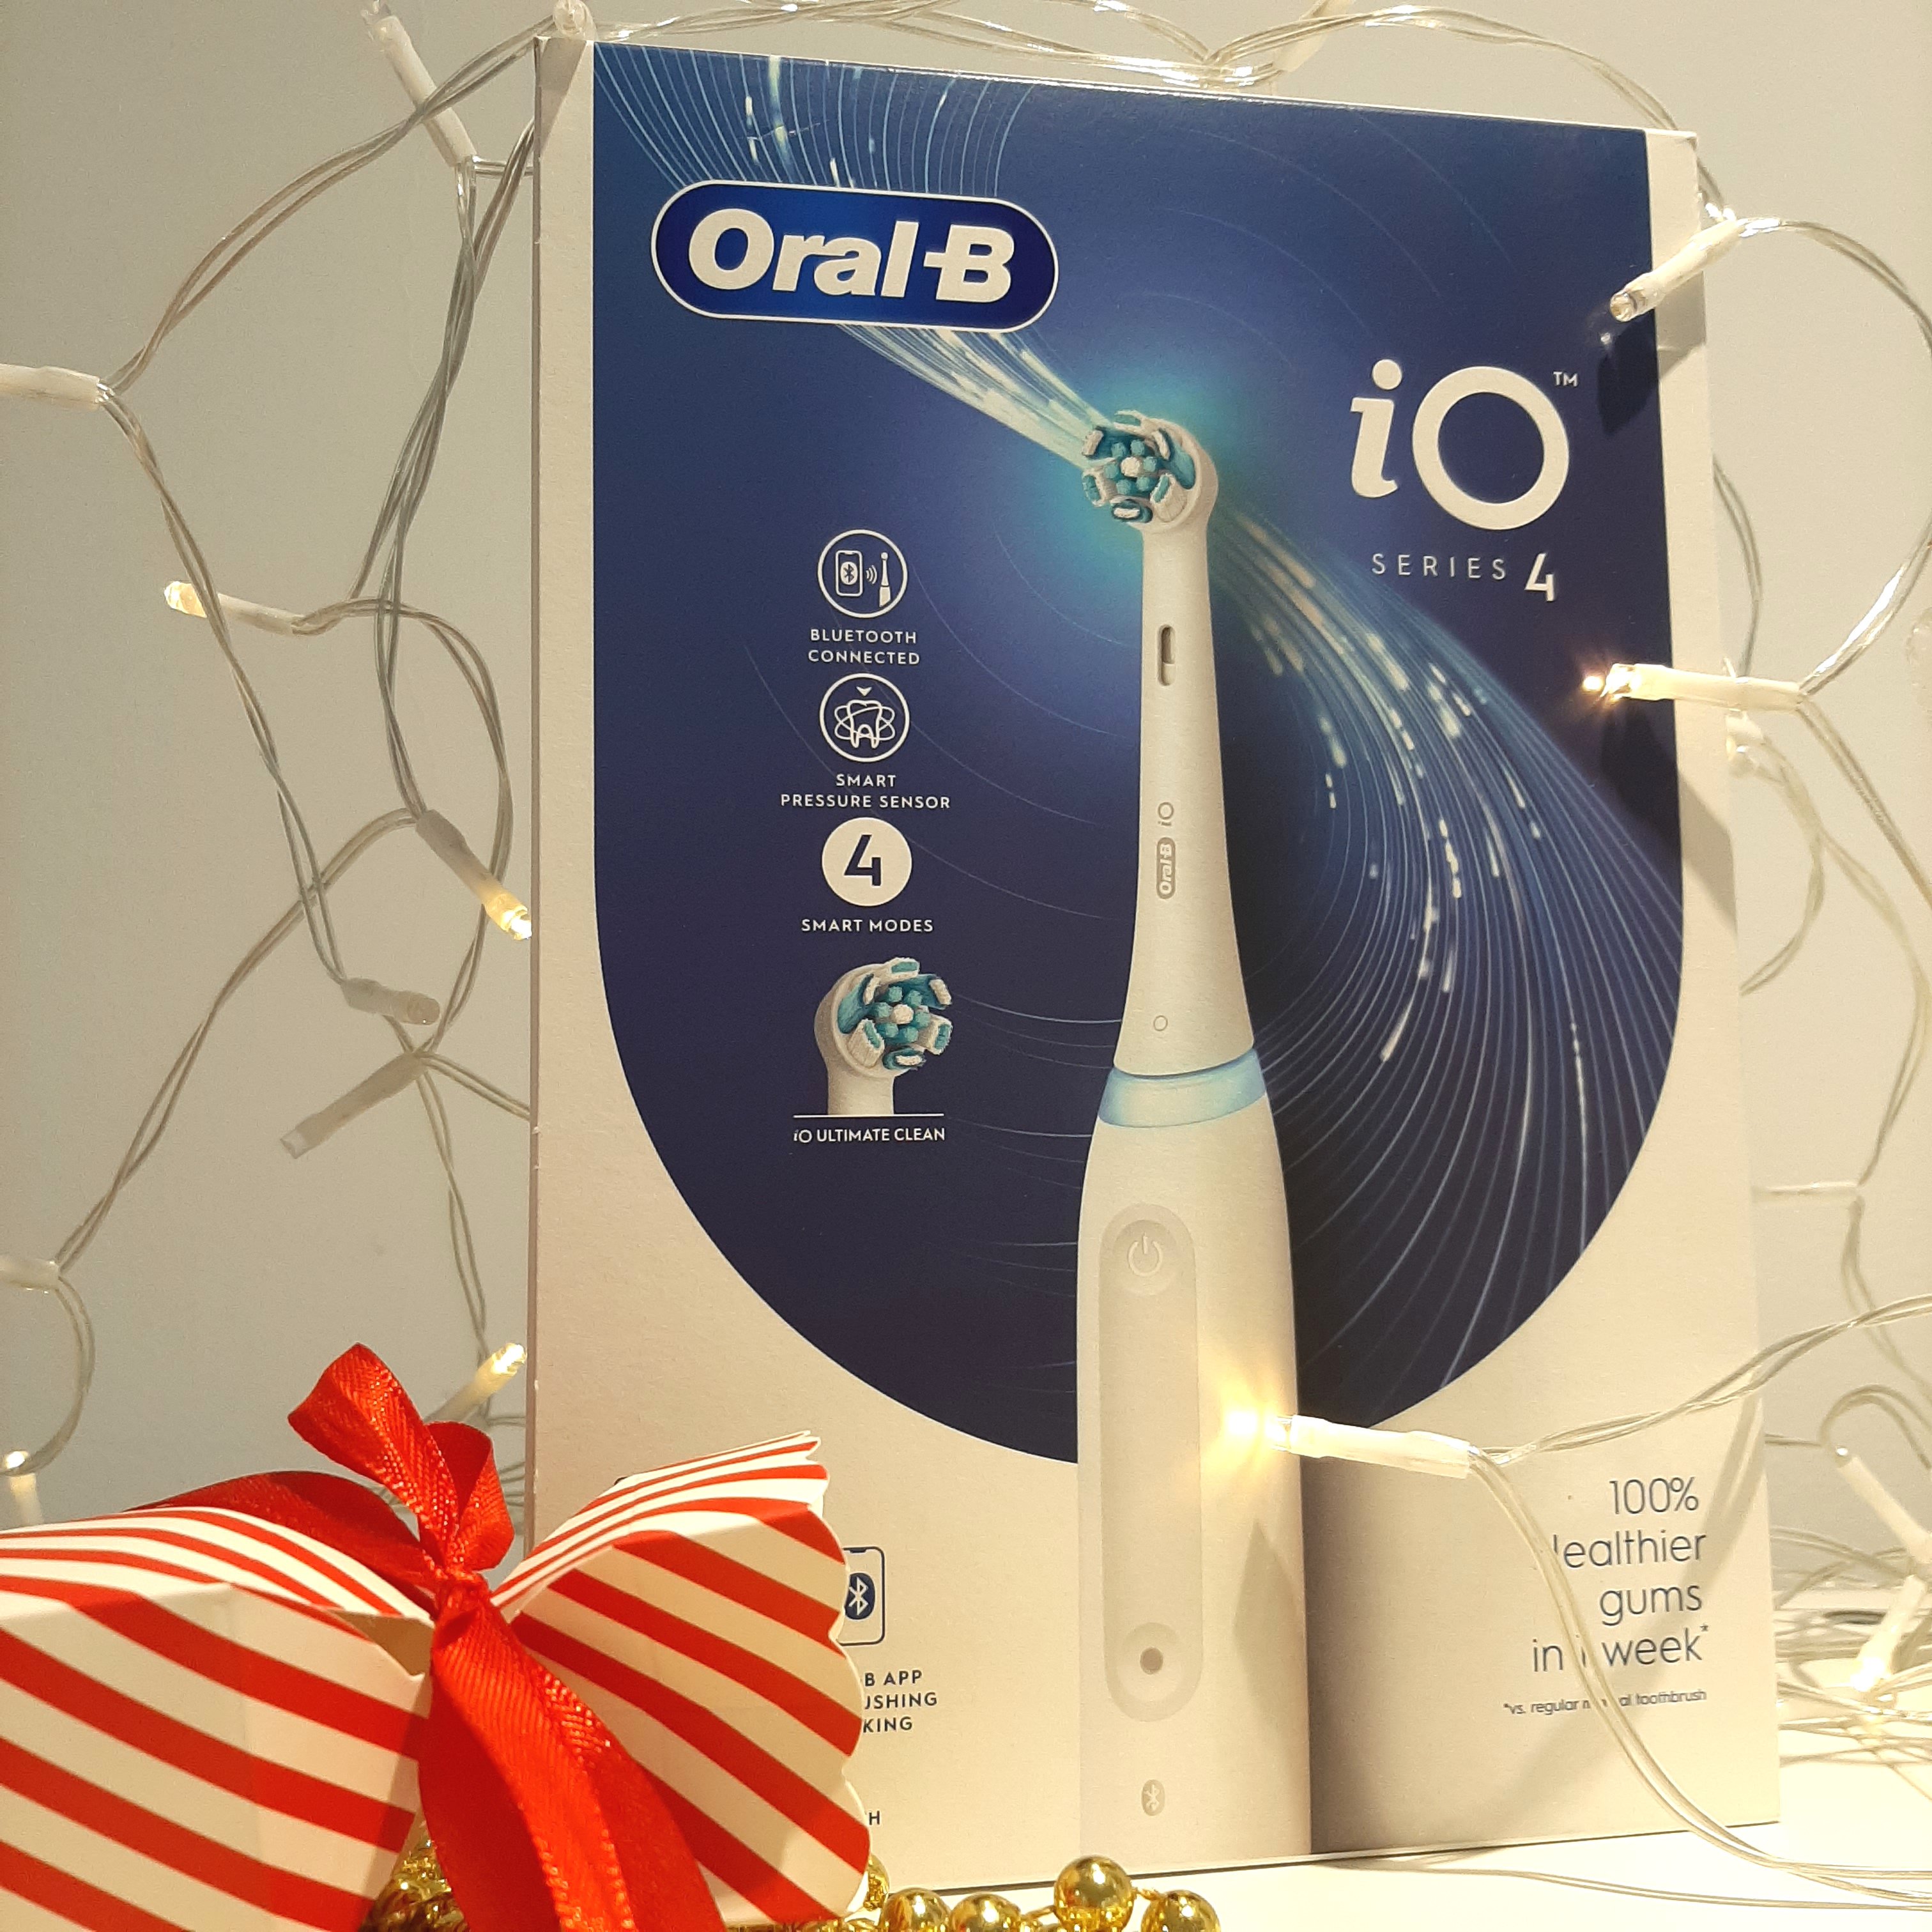 Oral B io series 4 toothbrush